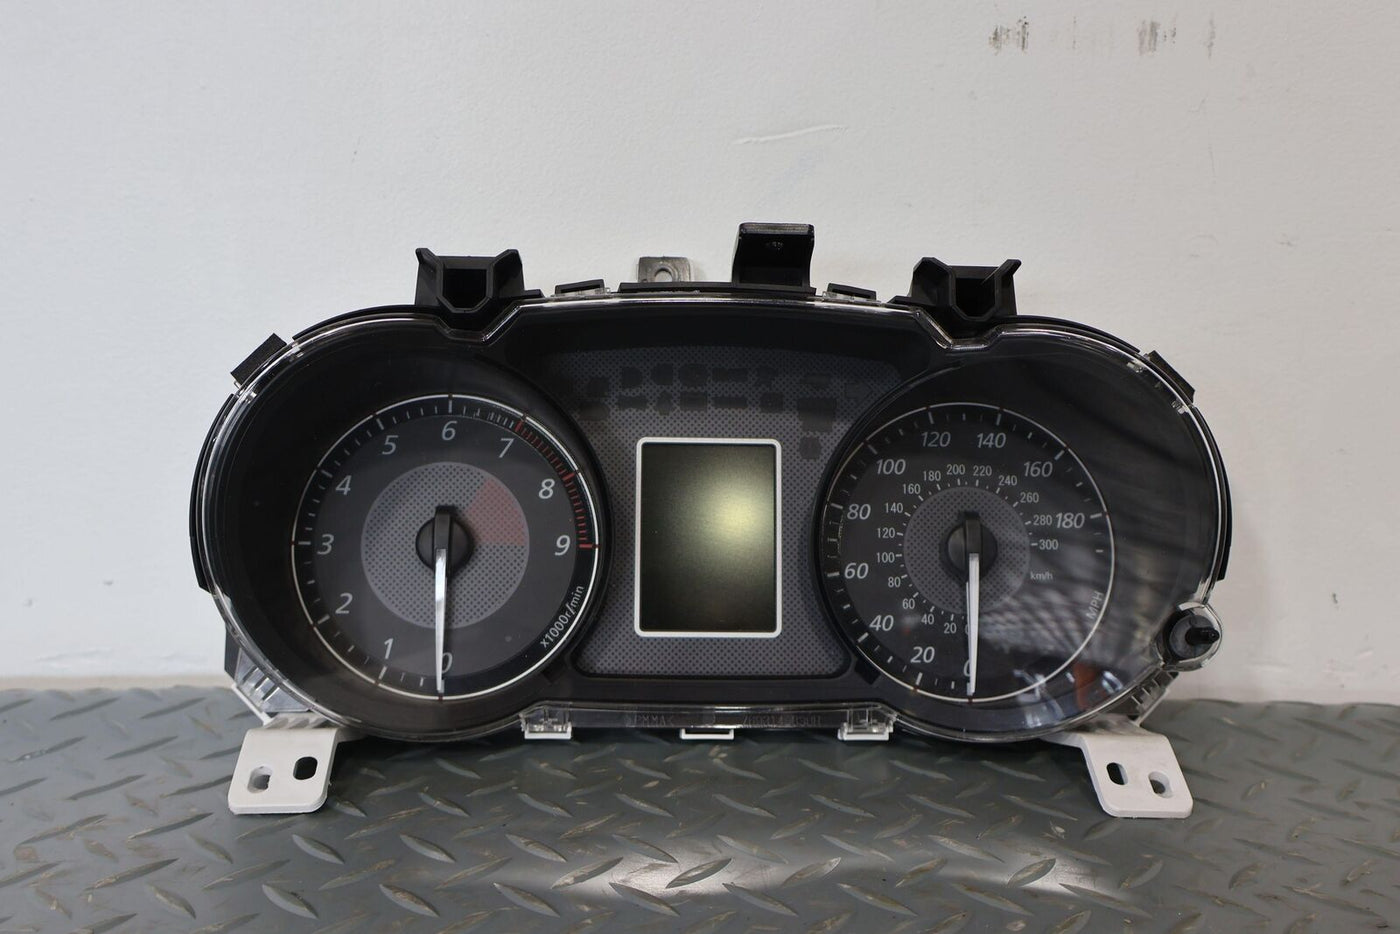 2008 Mitsubishi Lancer Evolution EVO X MR 180MPH Speedometer 769166-220H -Tested